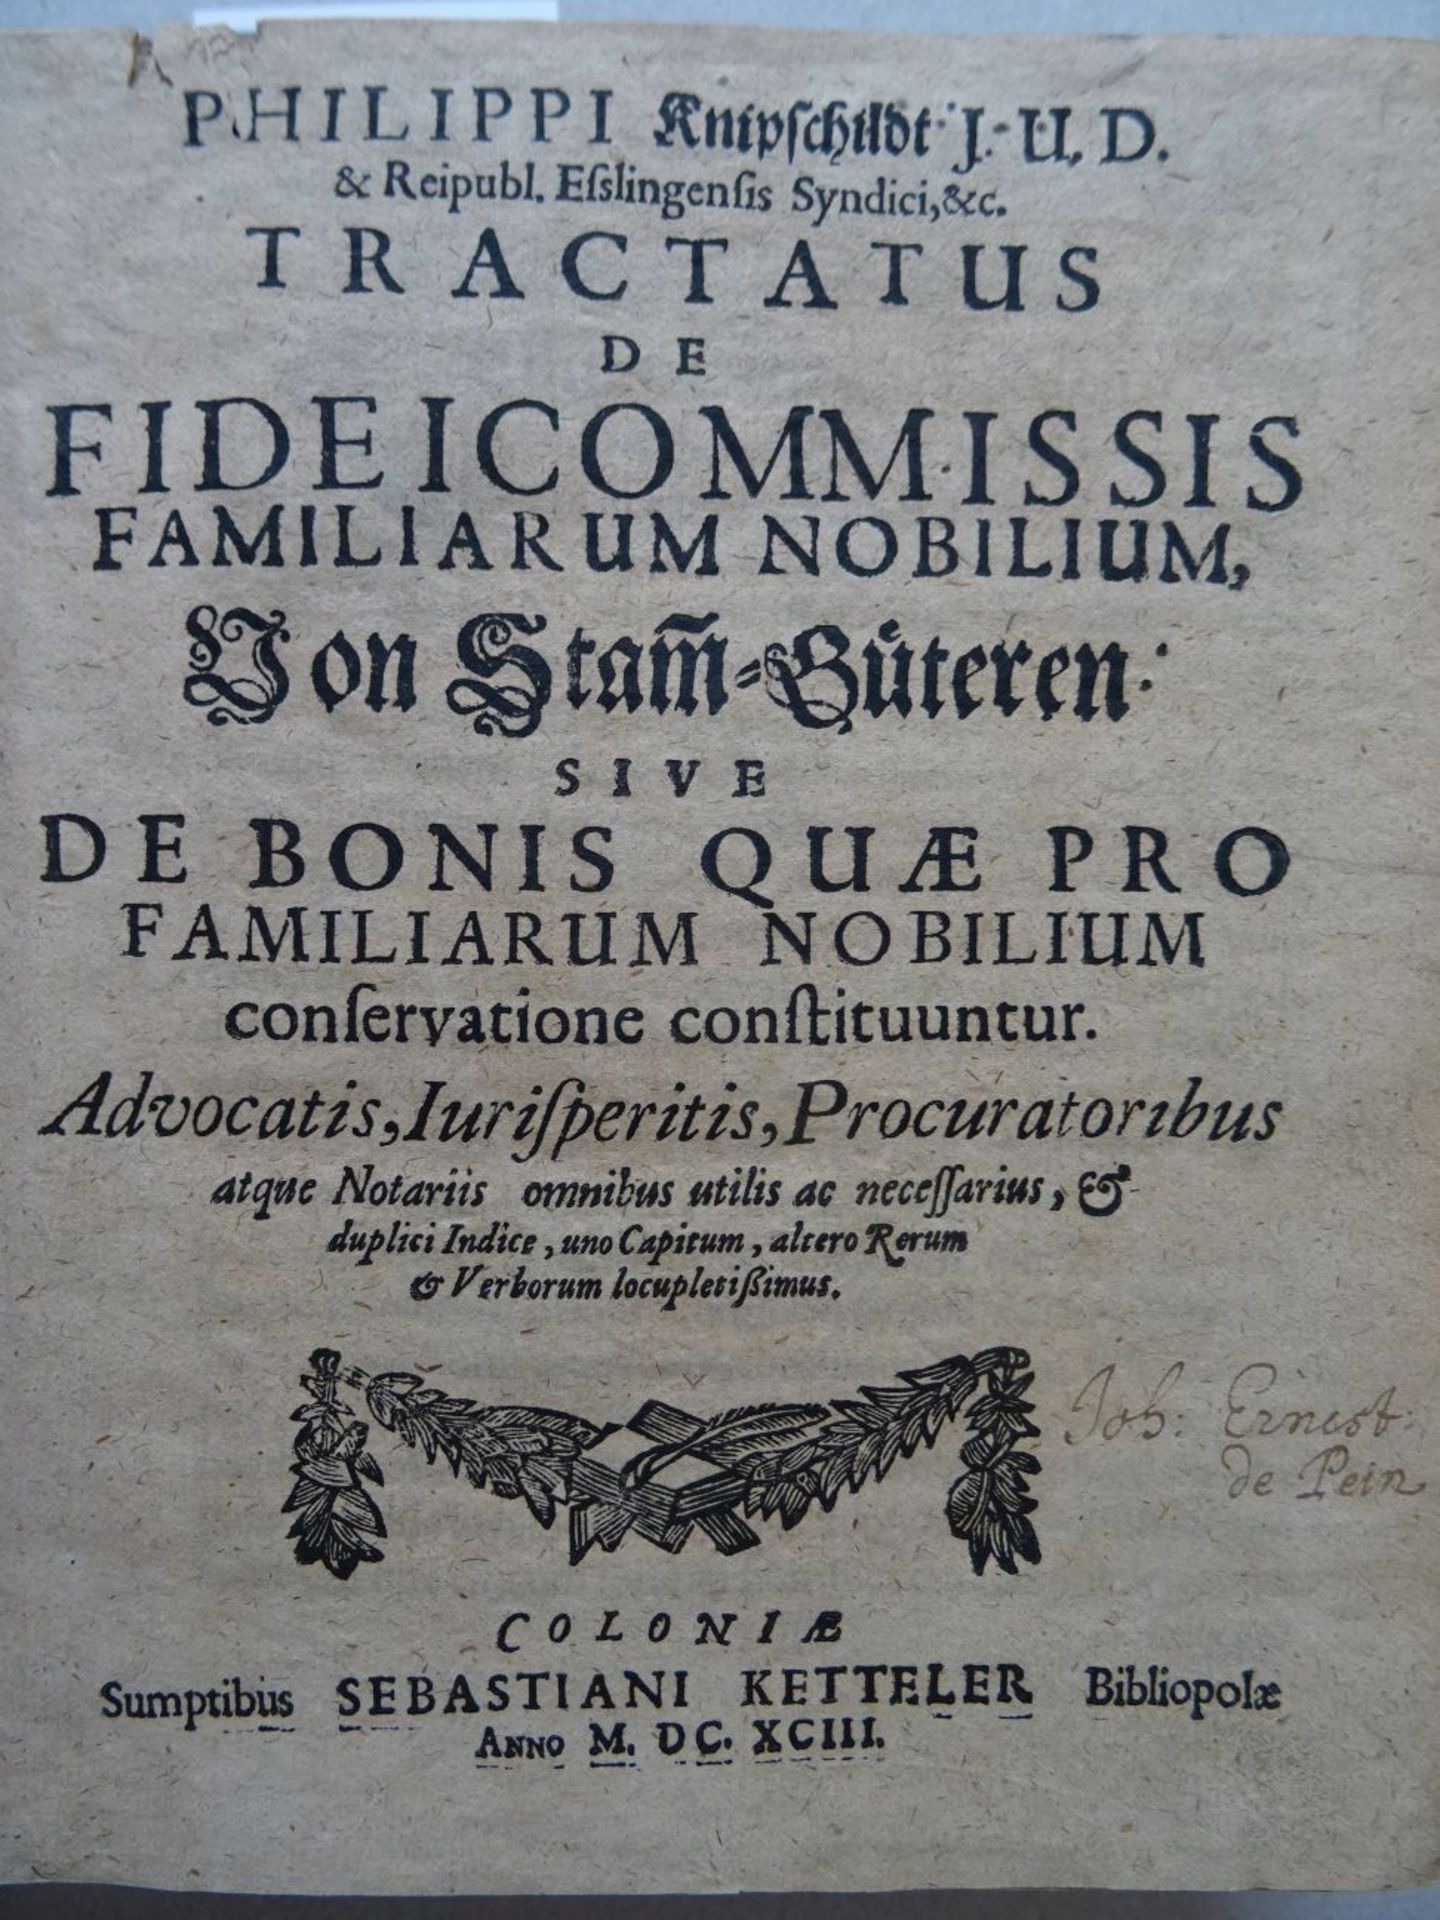 Knipschildt - Tractatus fideicommiss